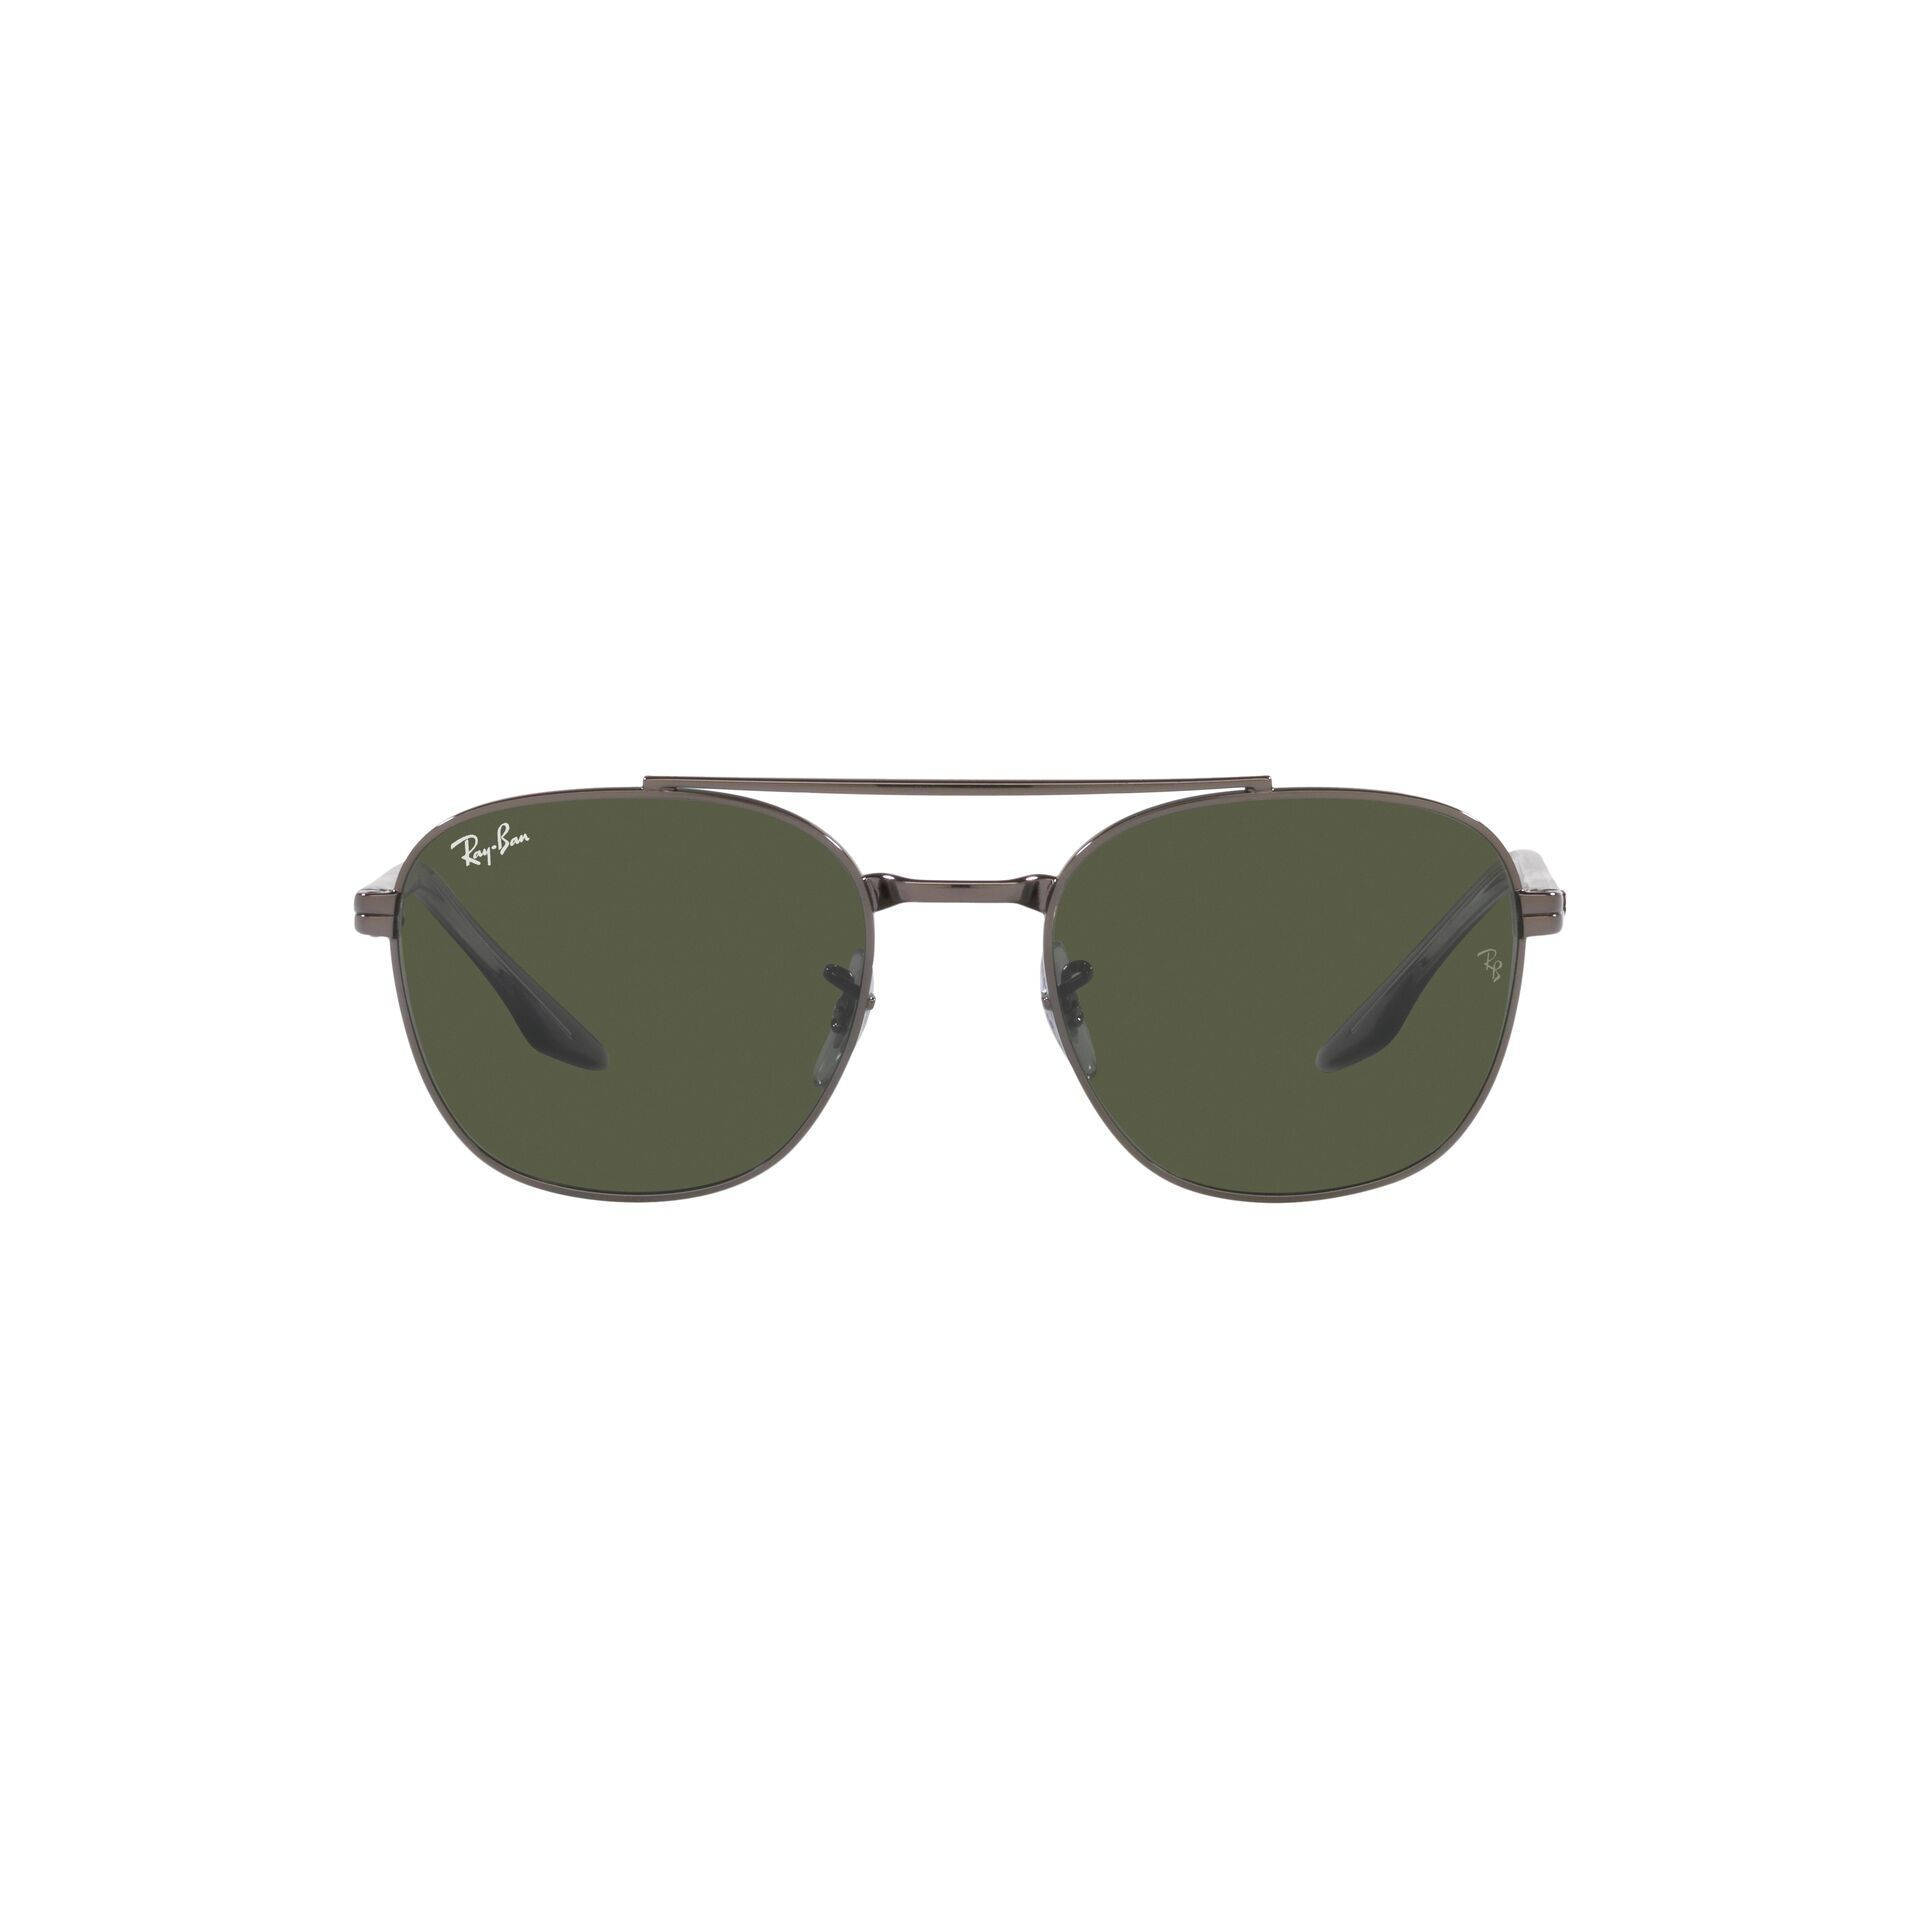 RB3688  - Sunglasses 004 31 - size 52